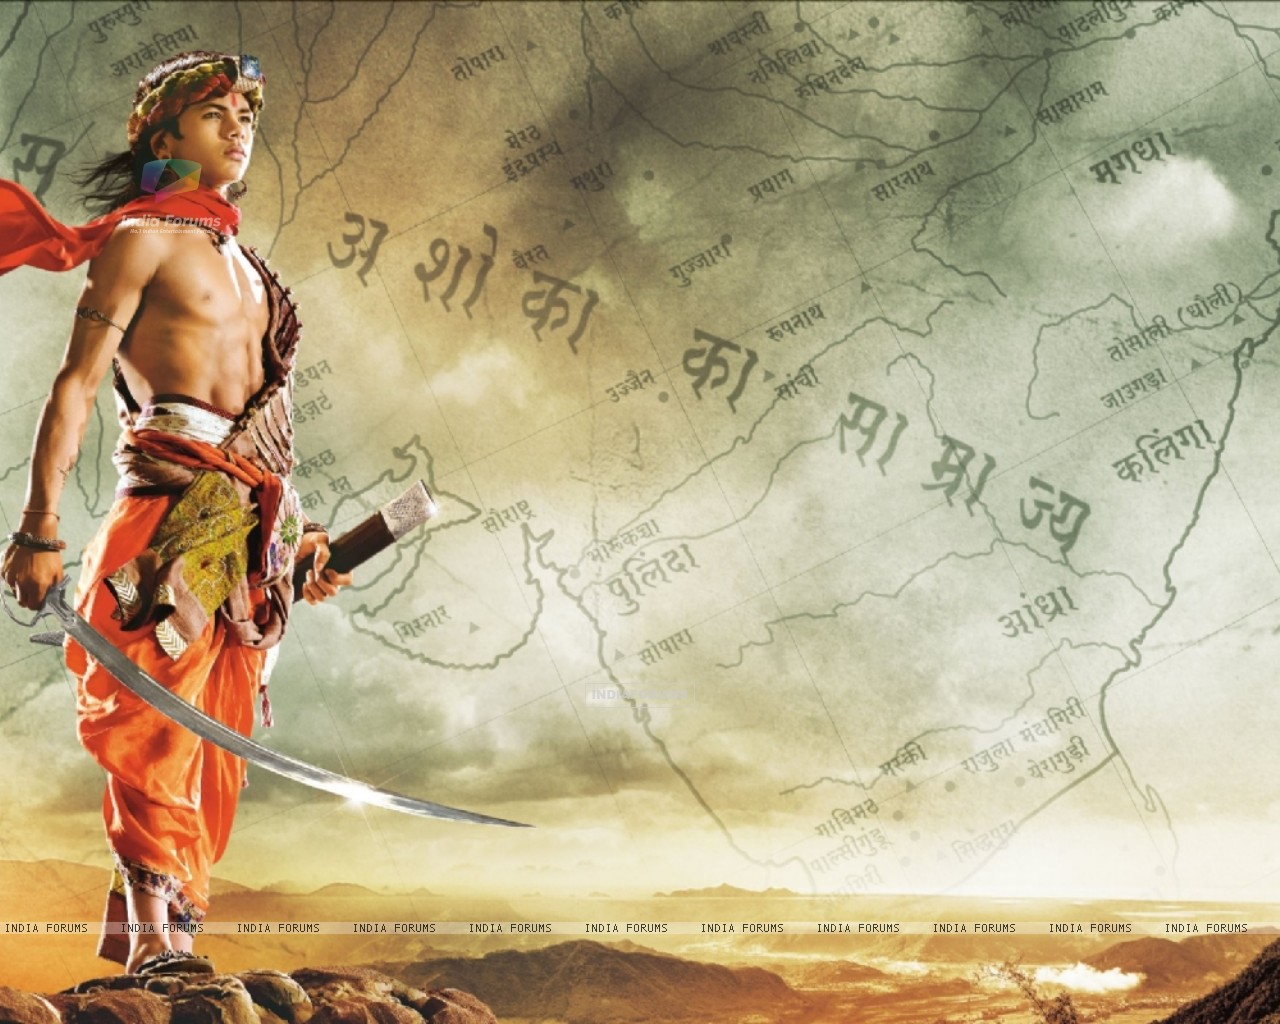 ranabir chakravarti exploring early india